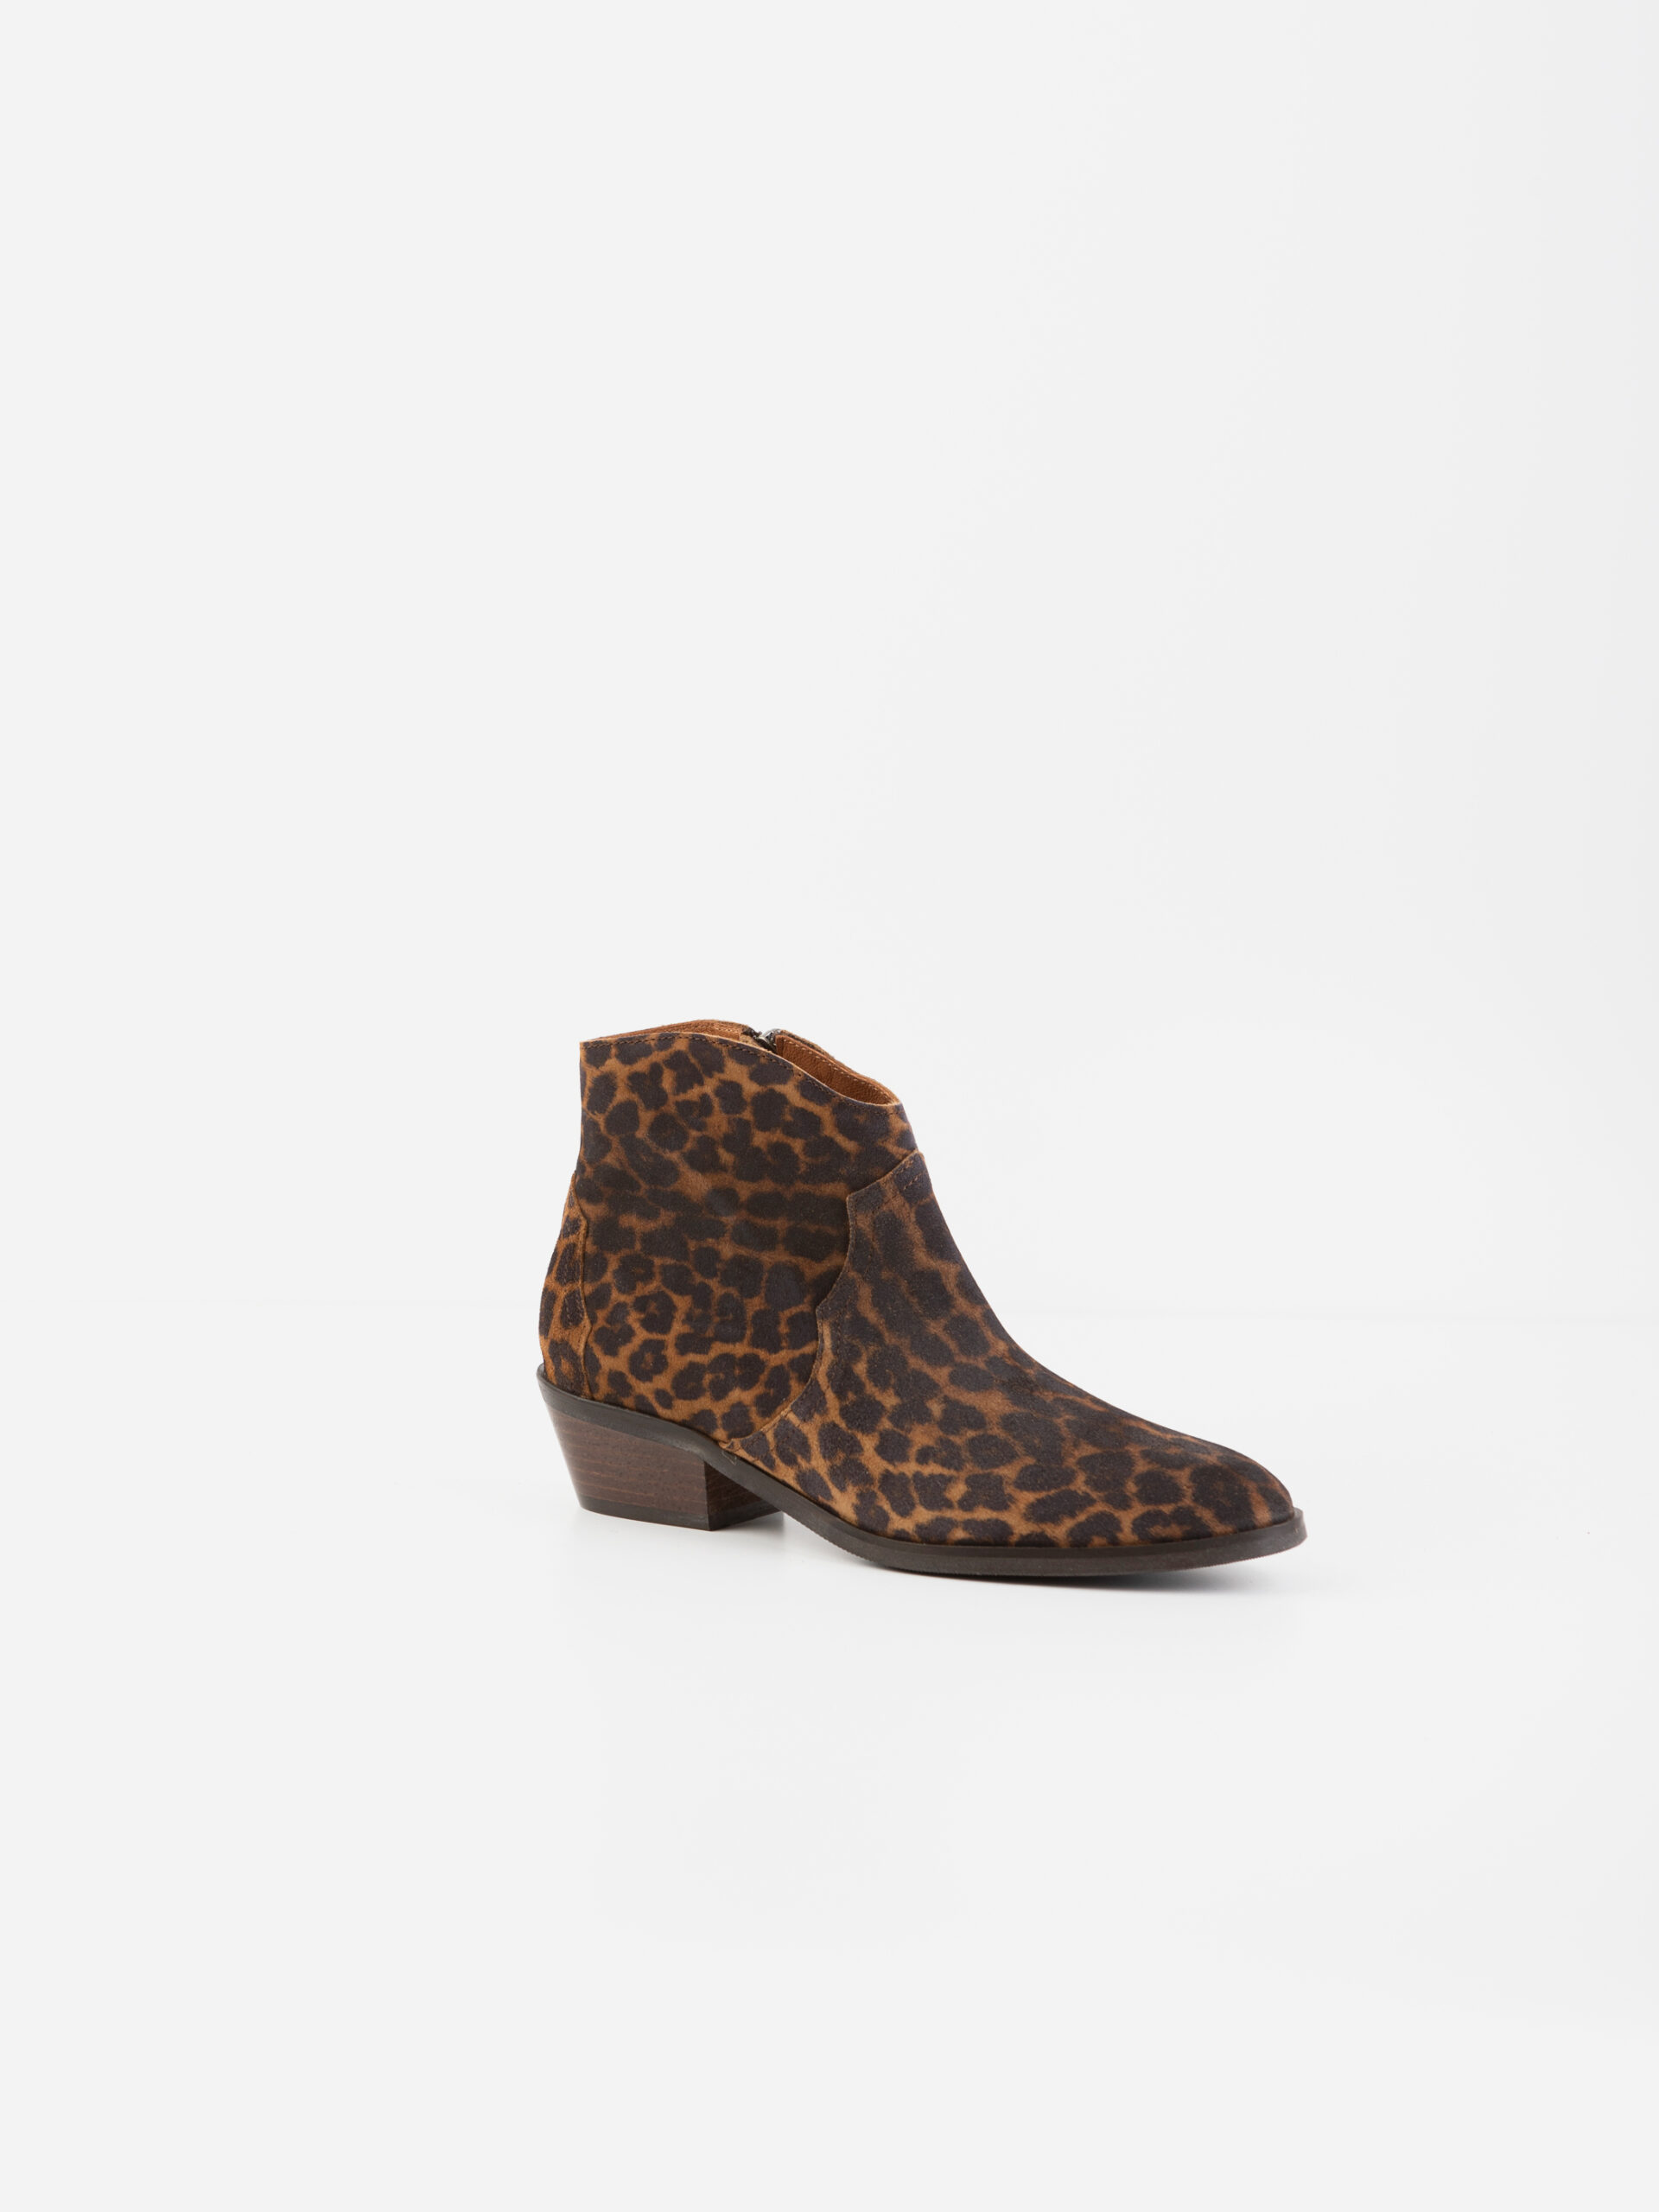 fiona-leopard-anonymus-copenhagen-booties-suede-leather-matchbxoathens